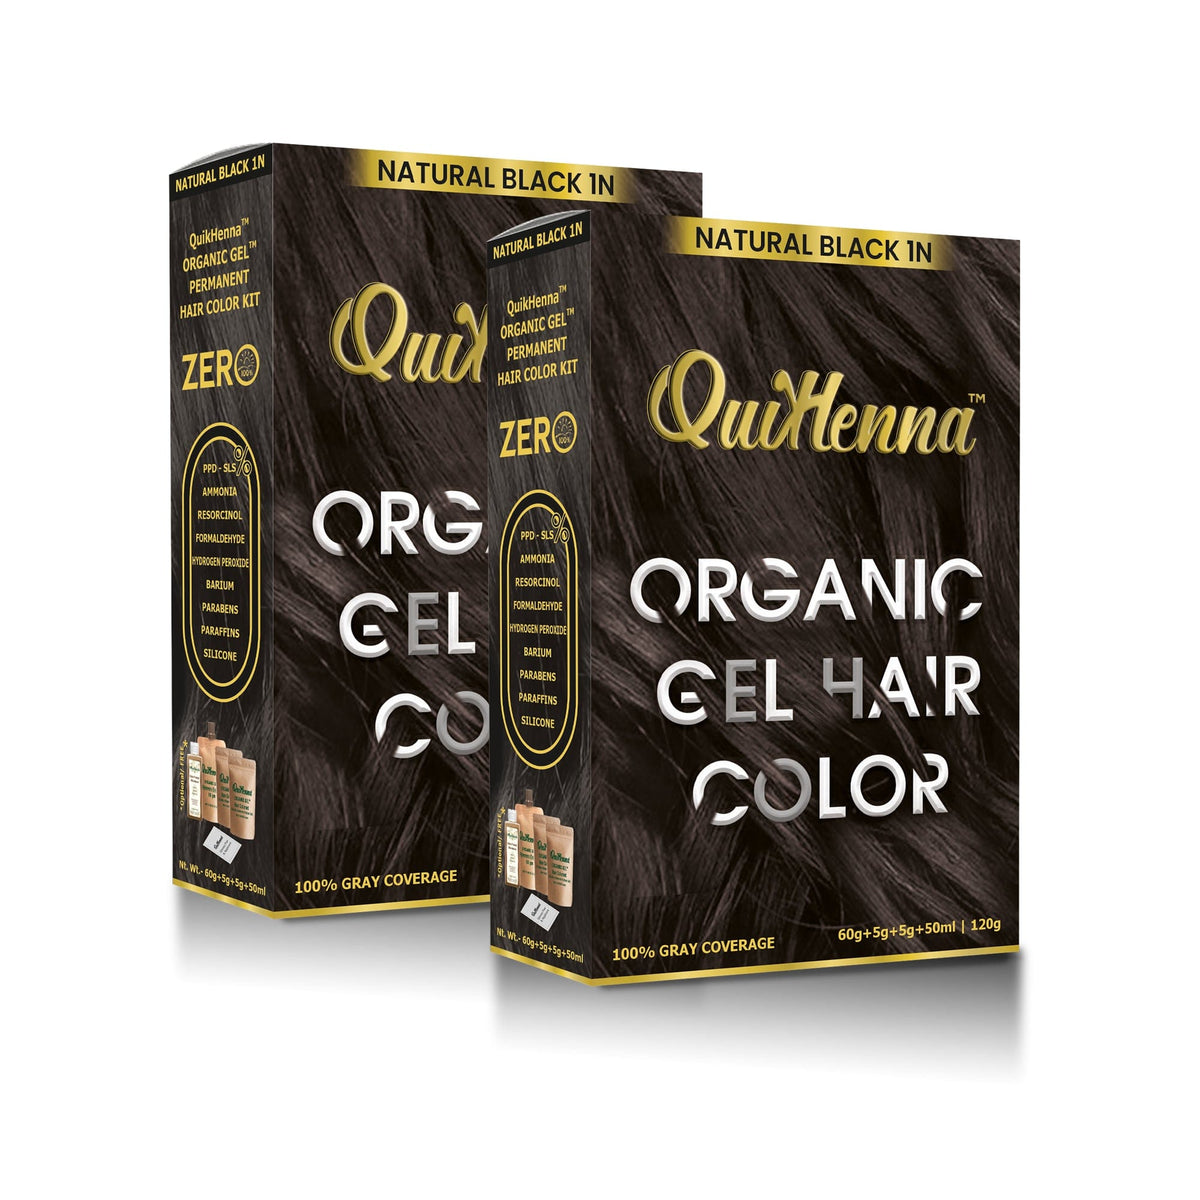 QuikHenna Damage Free Organic Gel Hair Color Natural Black 1N 120g (pack of 2) - QUIKHENNA